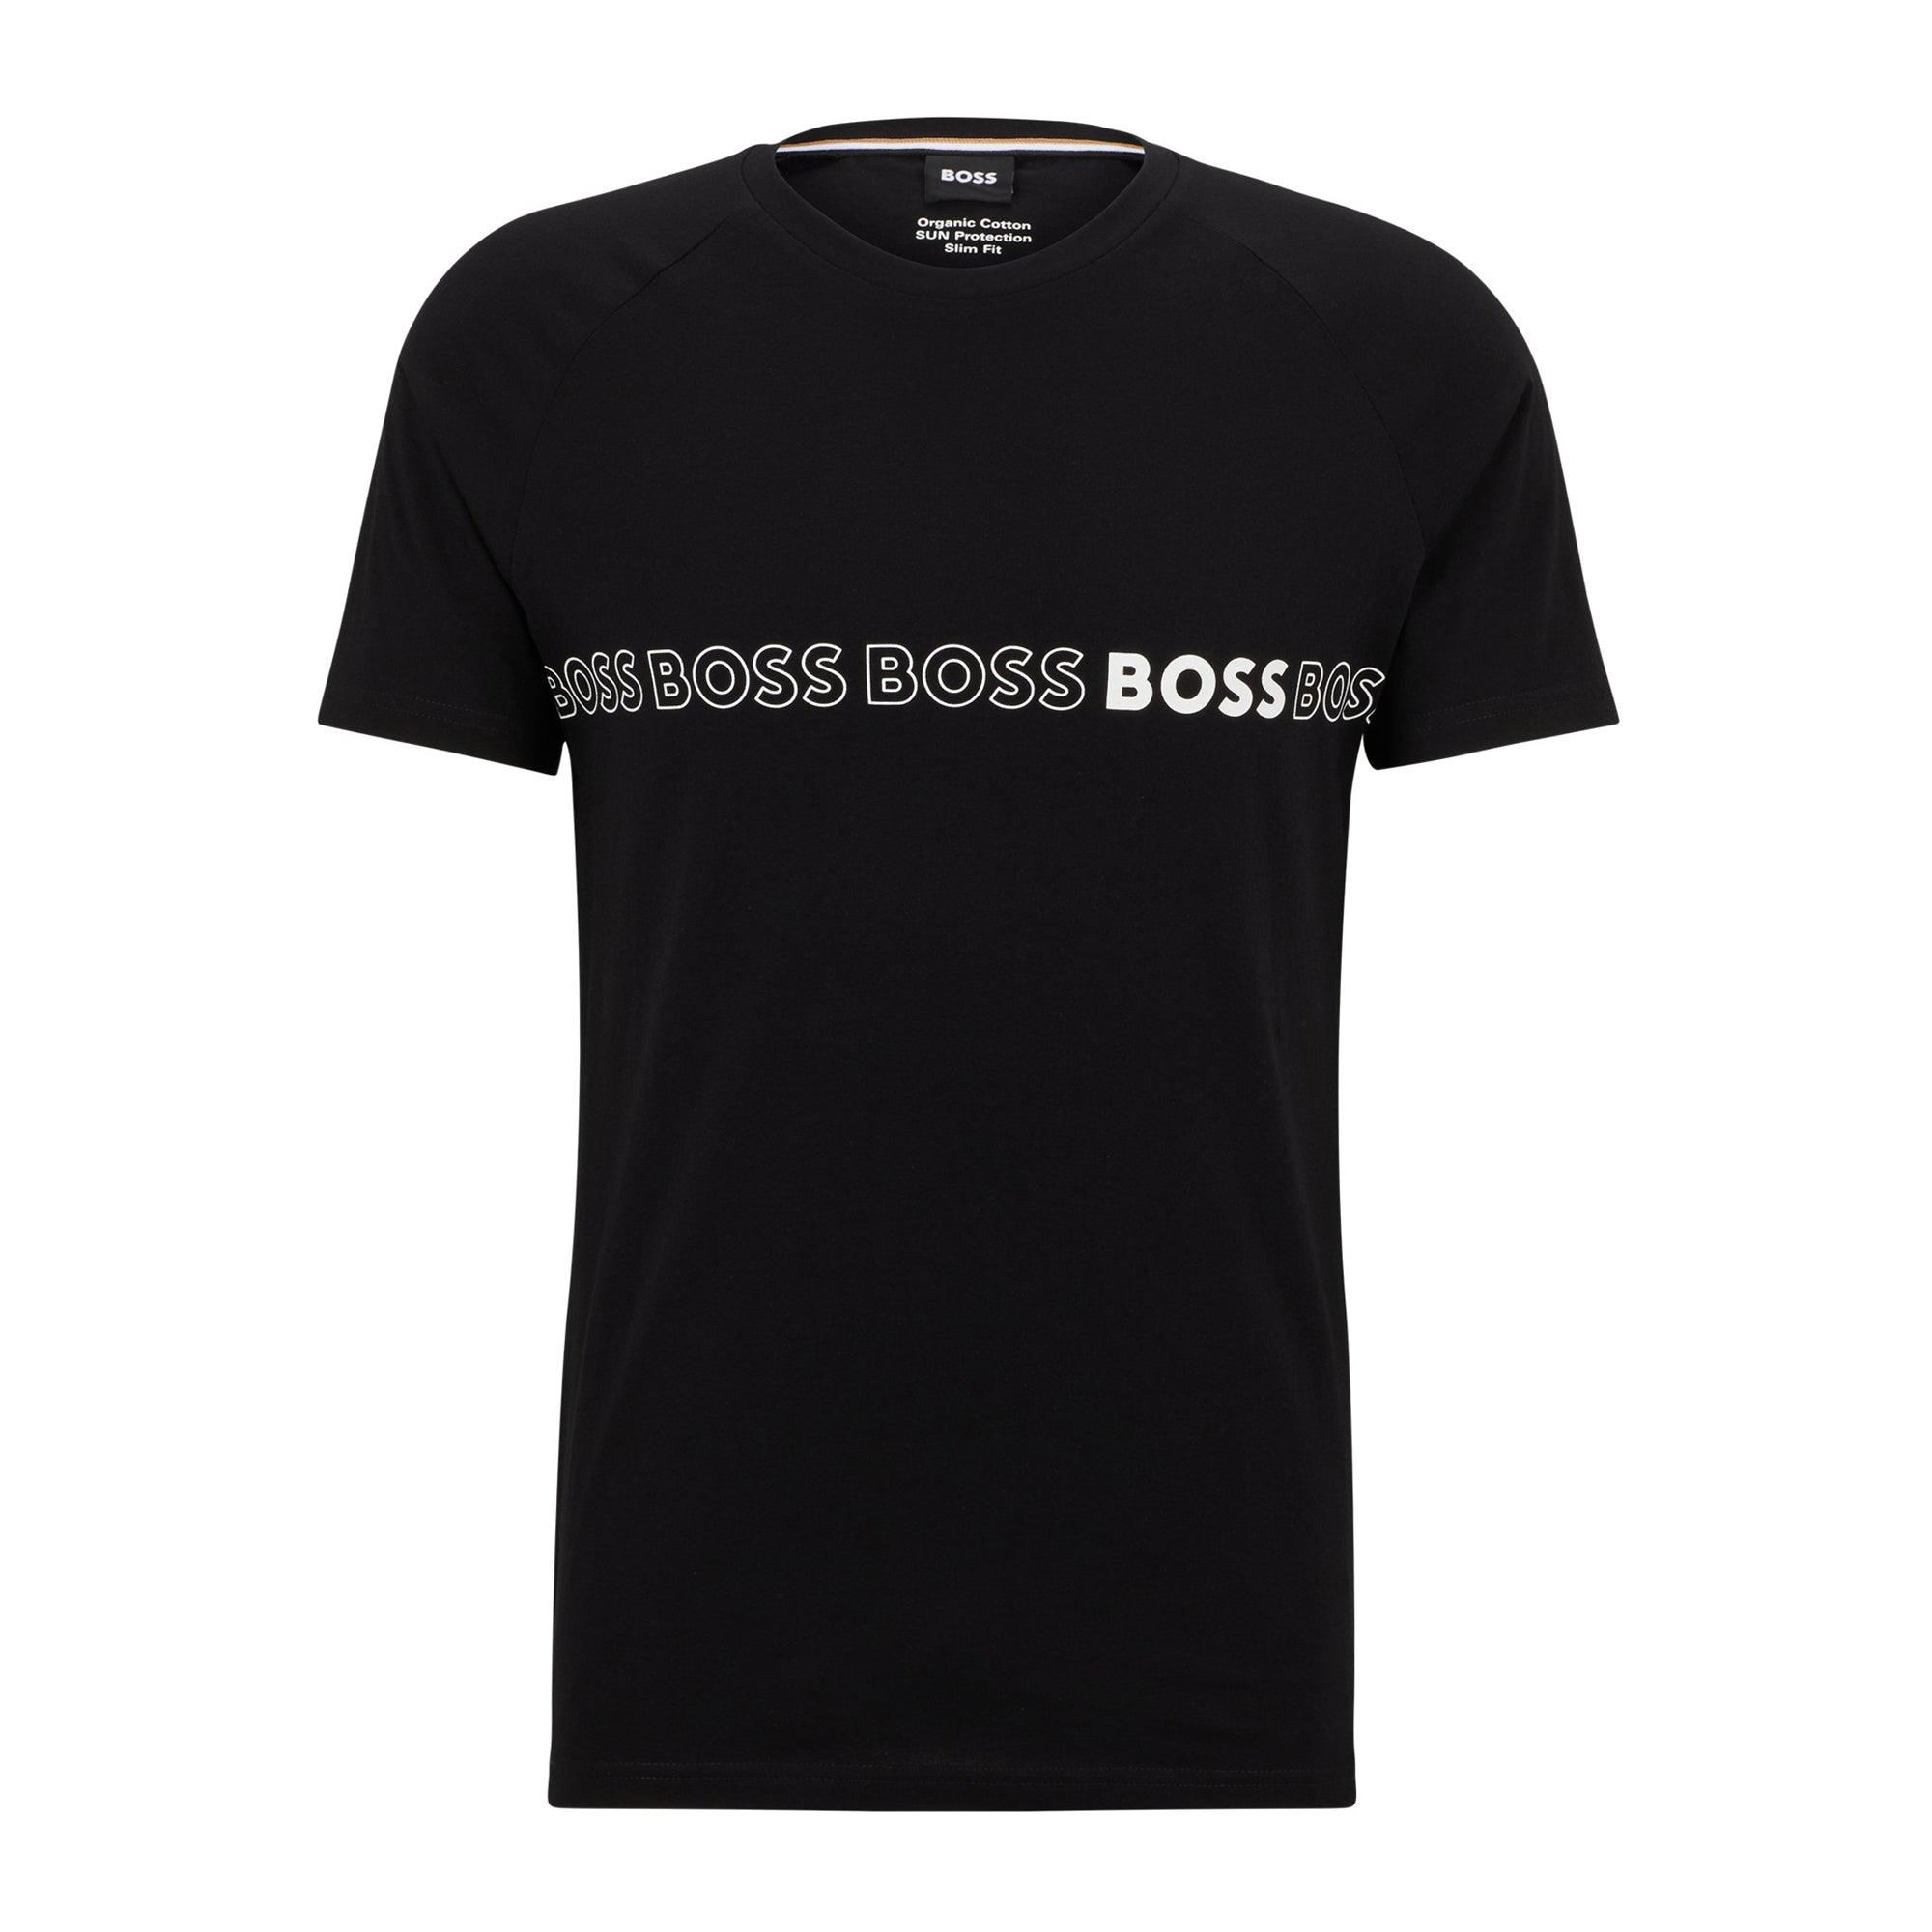 Hugo Boss Mens Slim Fit T-shirt With SPF 50+ Uv Protection Black